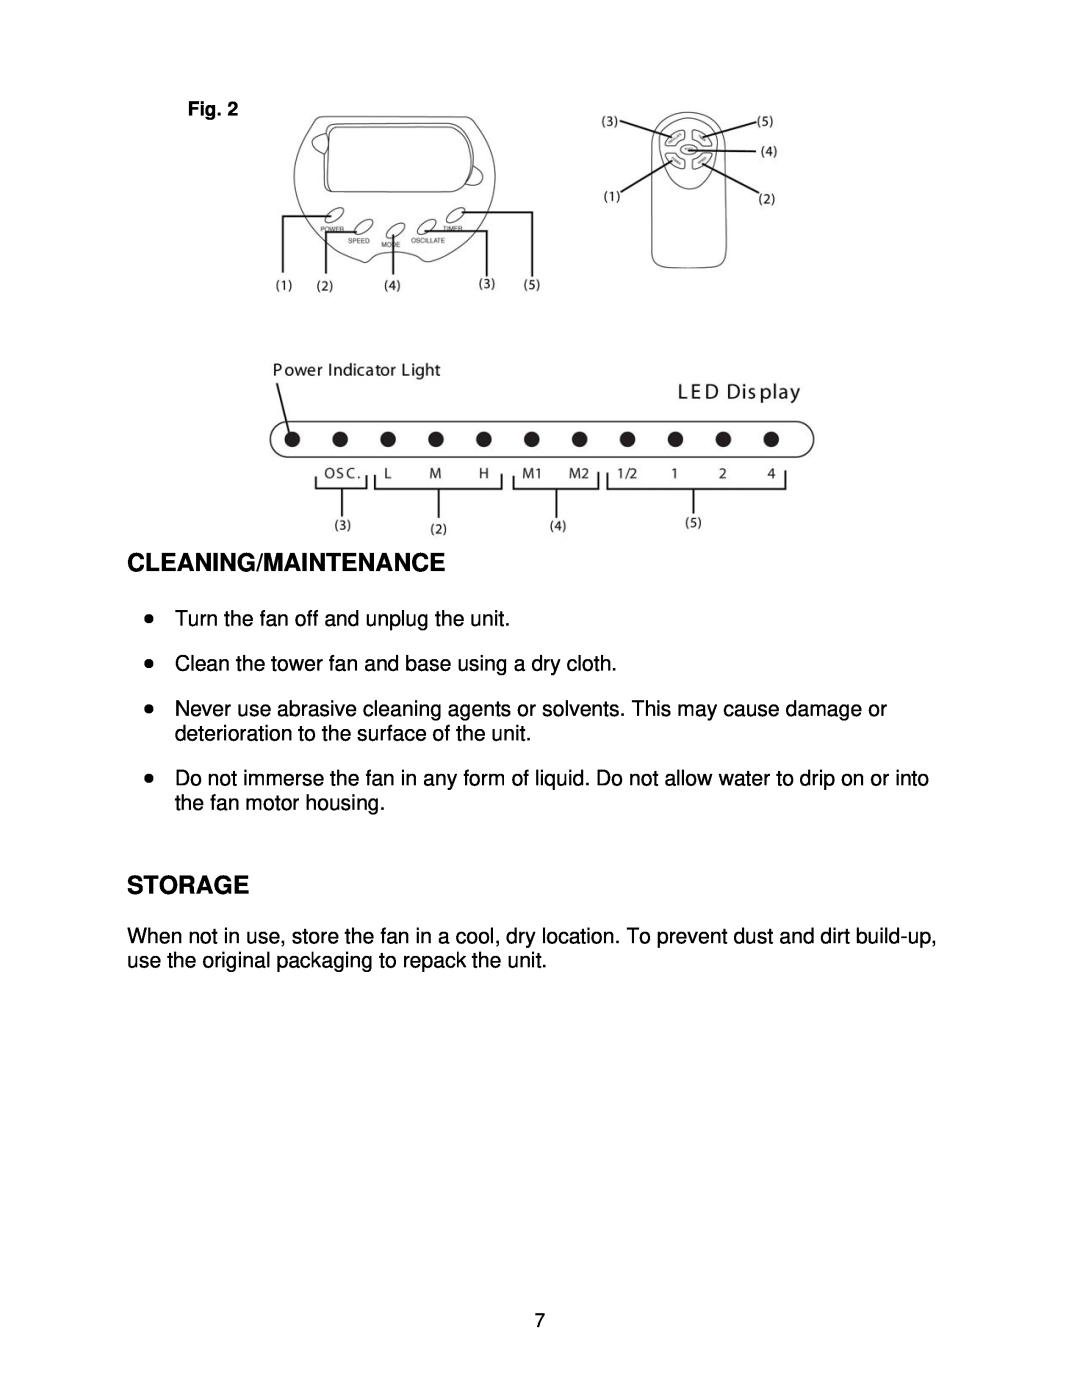 Soleus Air FC1-42R-03 owner manual Cleaning/Maintenance, Storage 